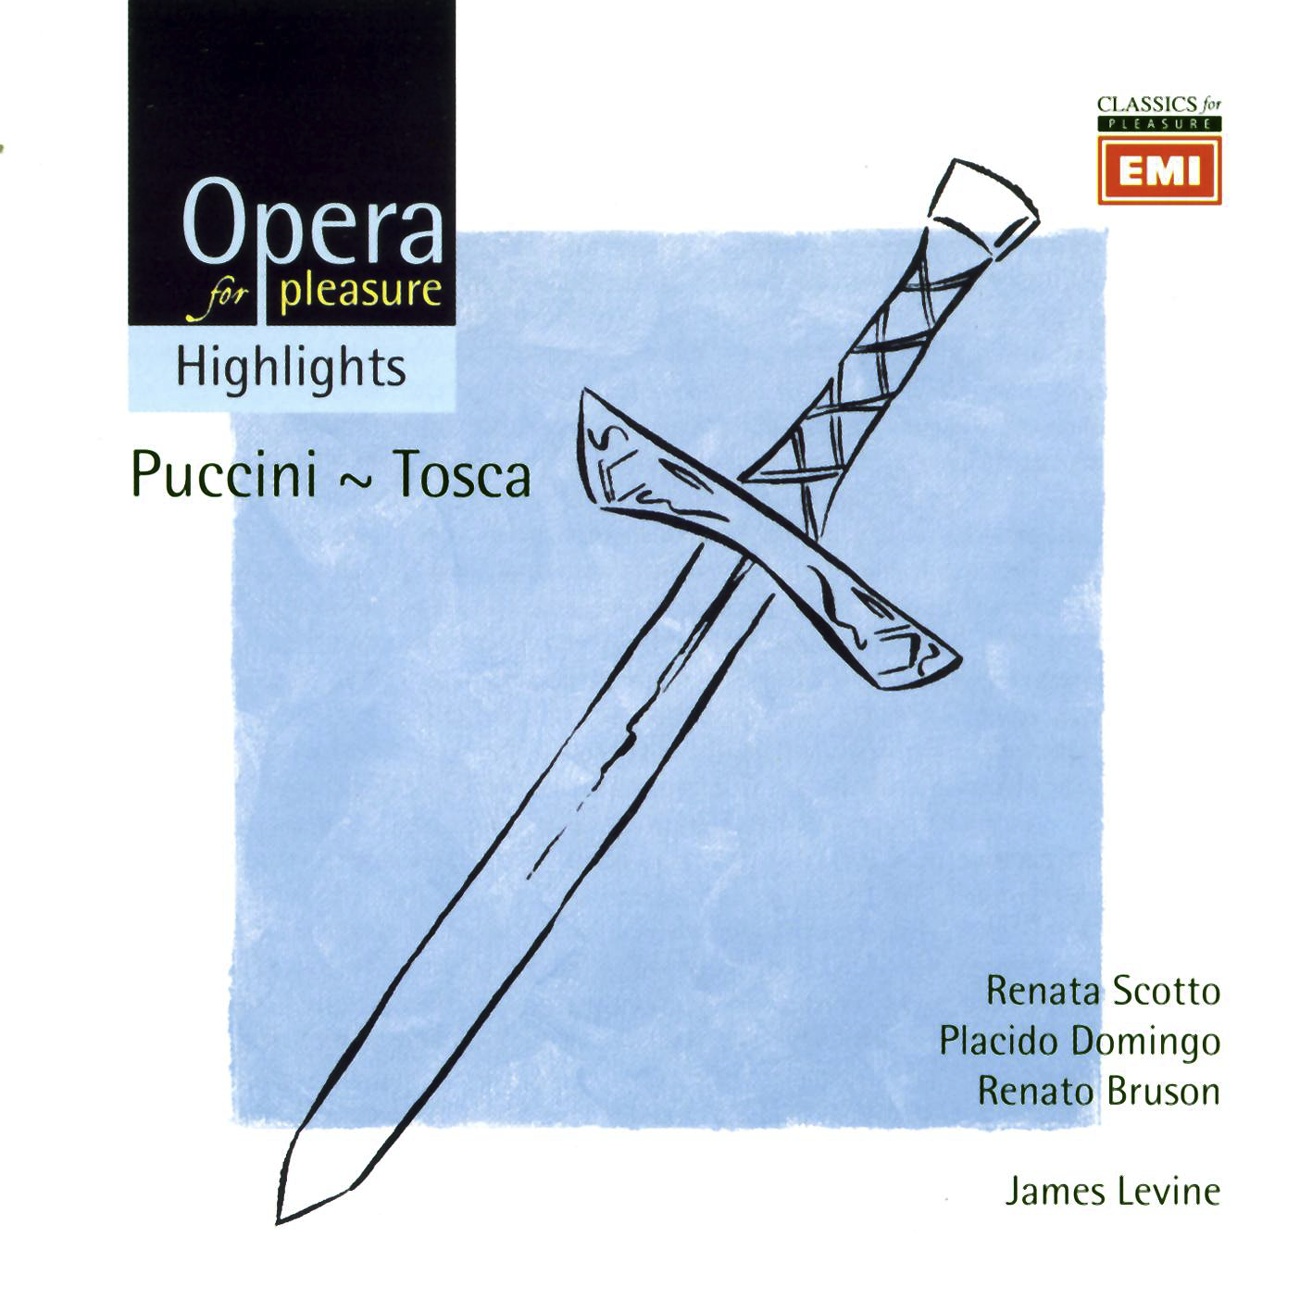 Tosca - Opera in three acts (1997 Digital Remaster), Act II: Floria!....Amore!...Sei tu? (Cavaradossi, Tosca, Scarpia, Sciarrone